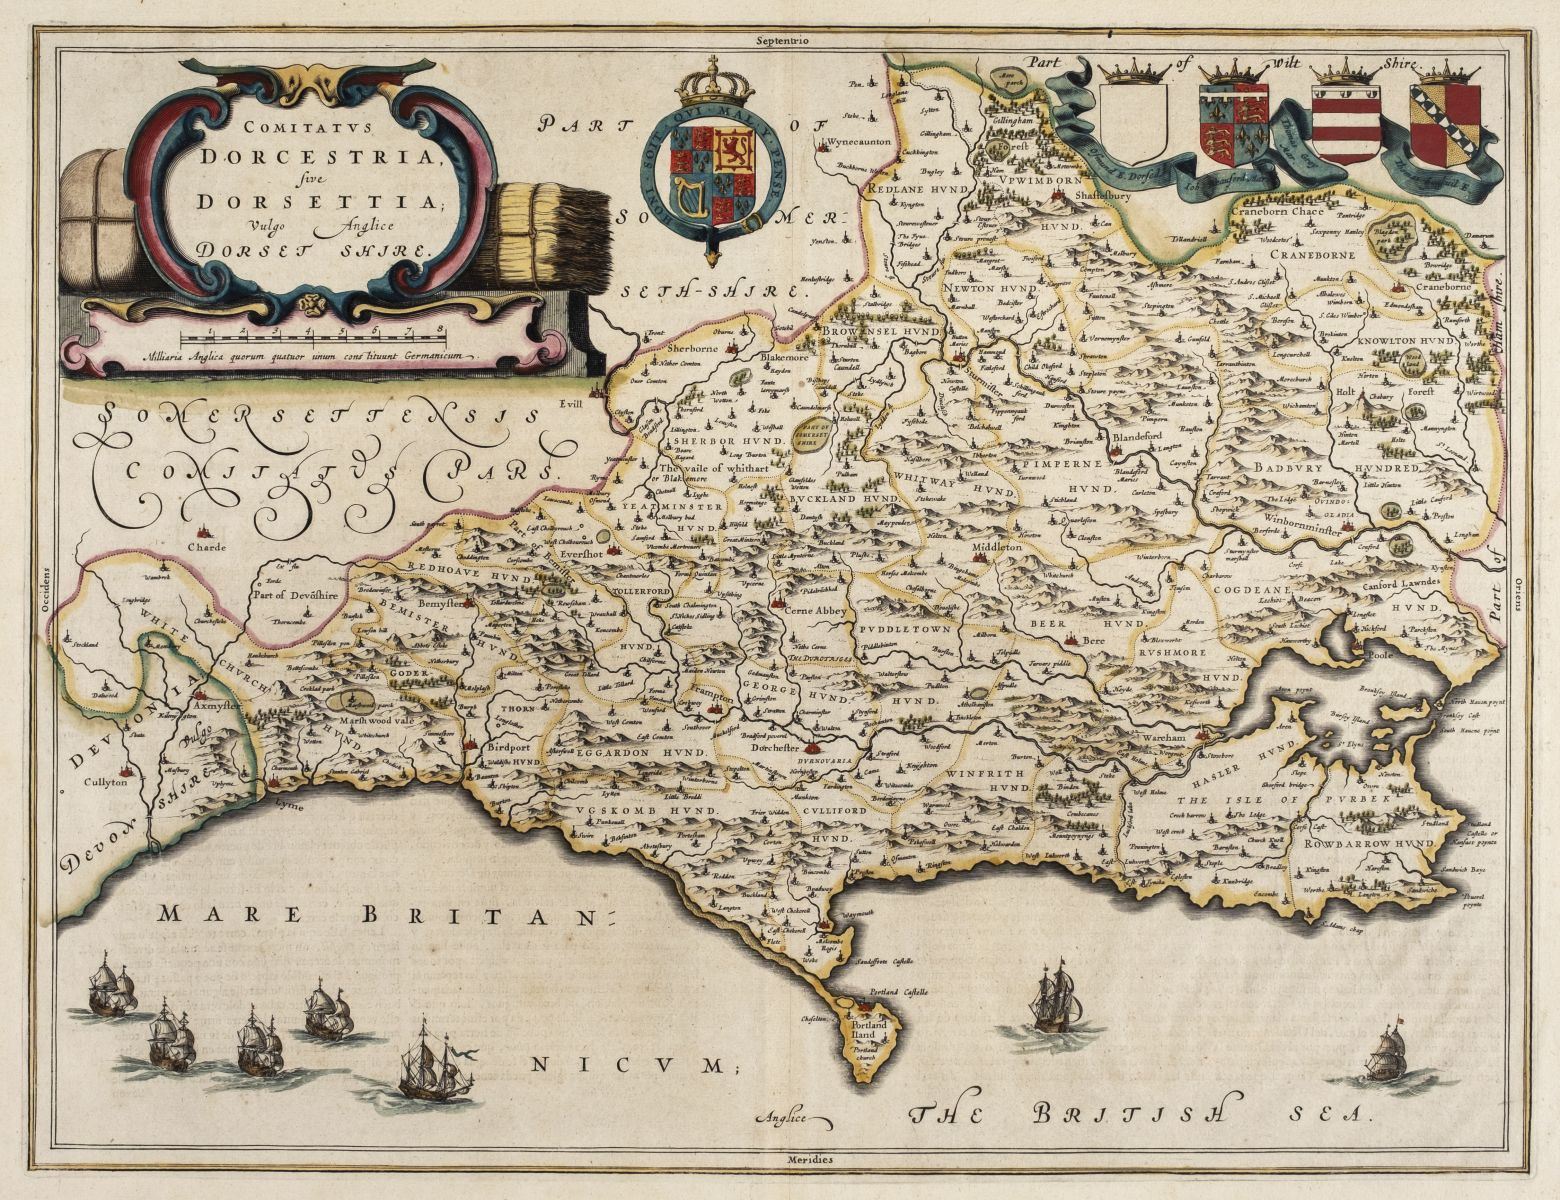 Dorset. Blaeu (Johannes), Comitatus Dorcestria sive Dorsettia; vulgo Anglice Dorset Shire, 1660